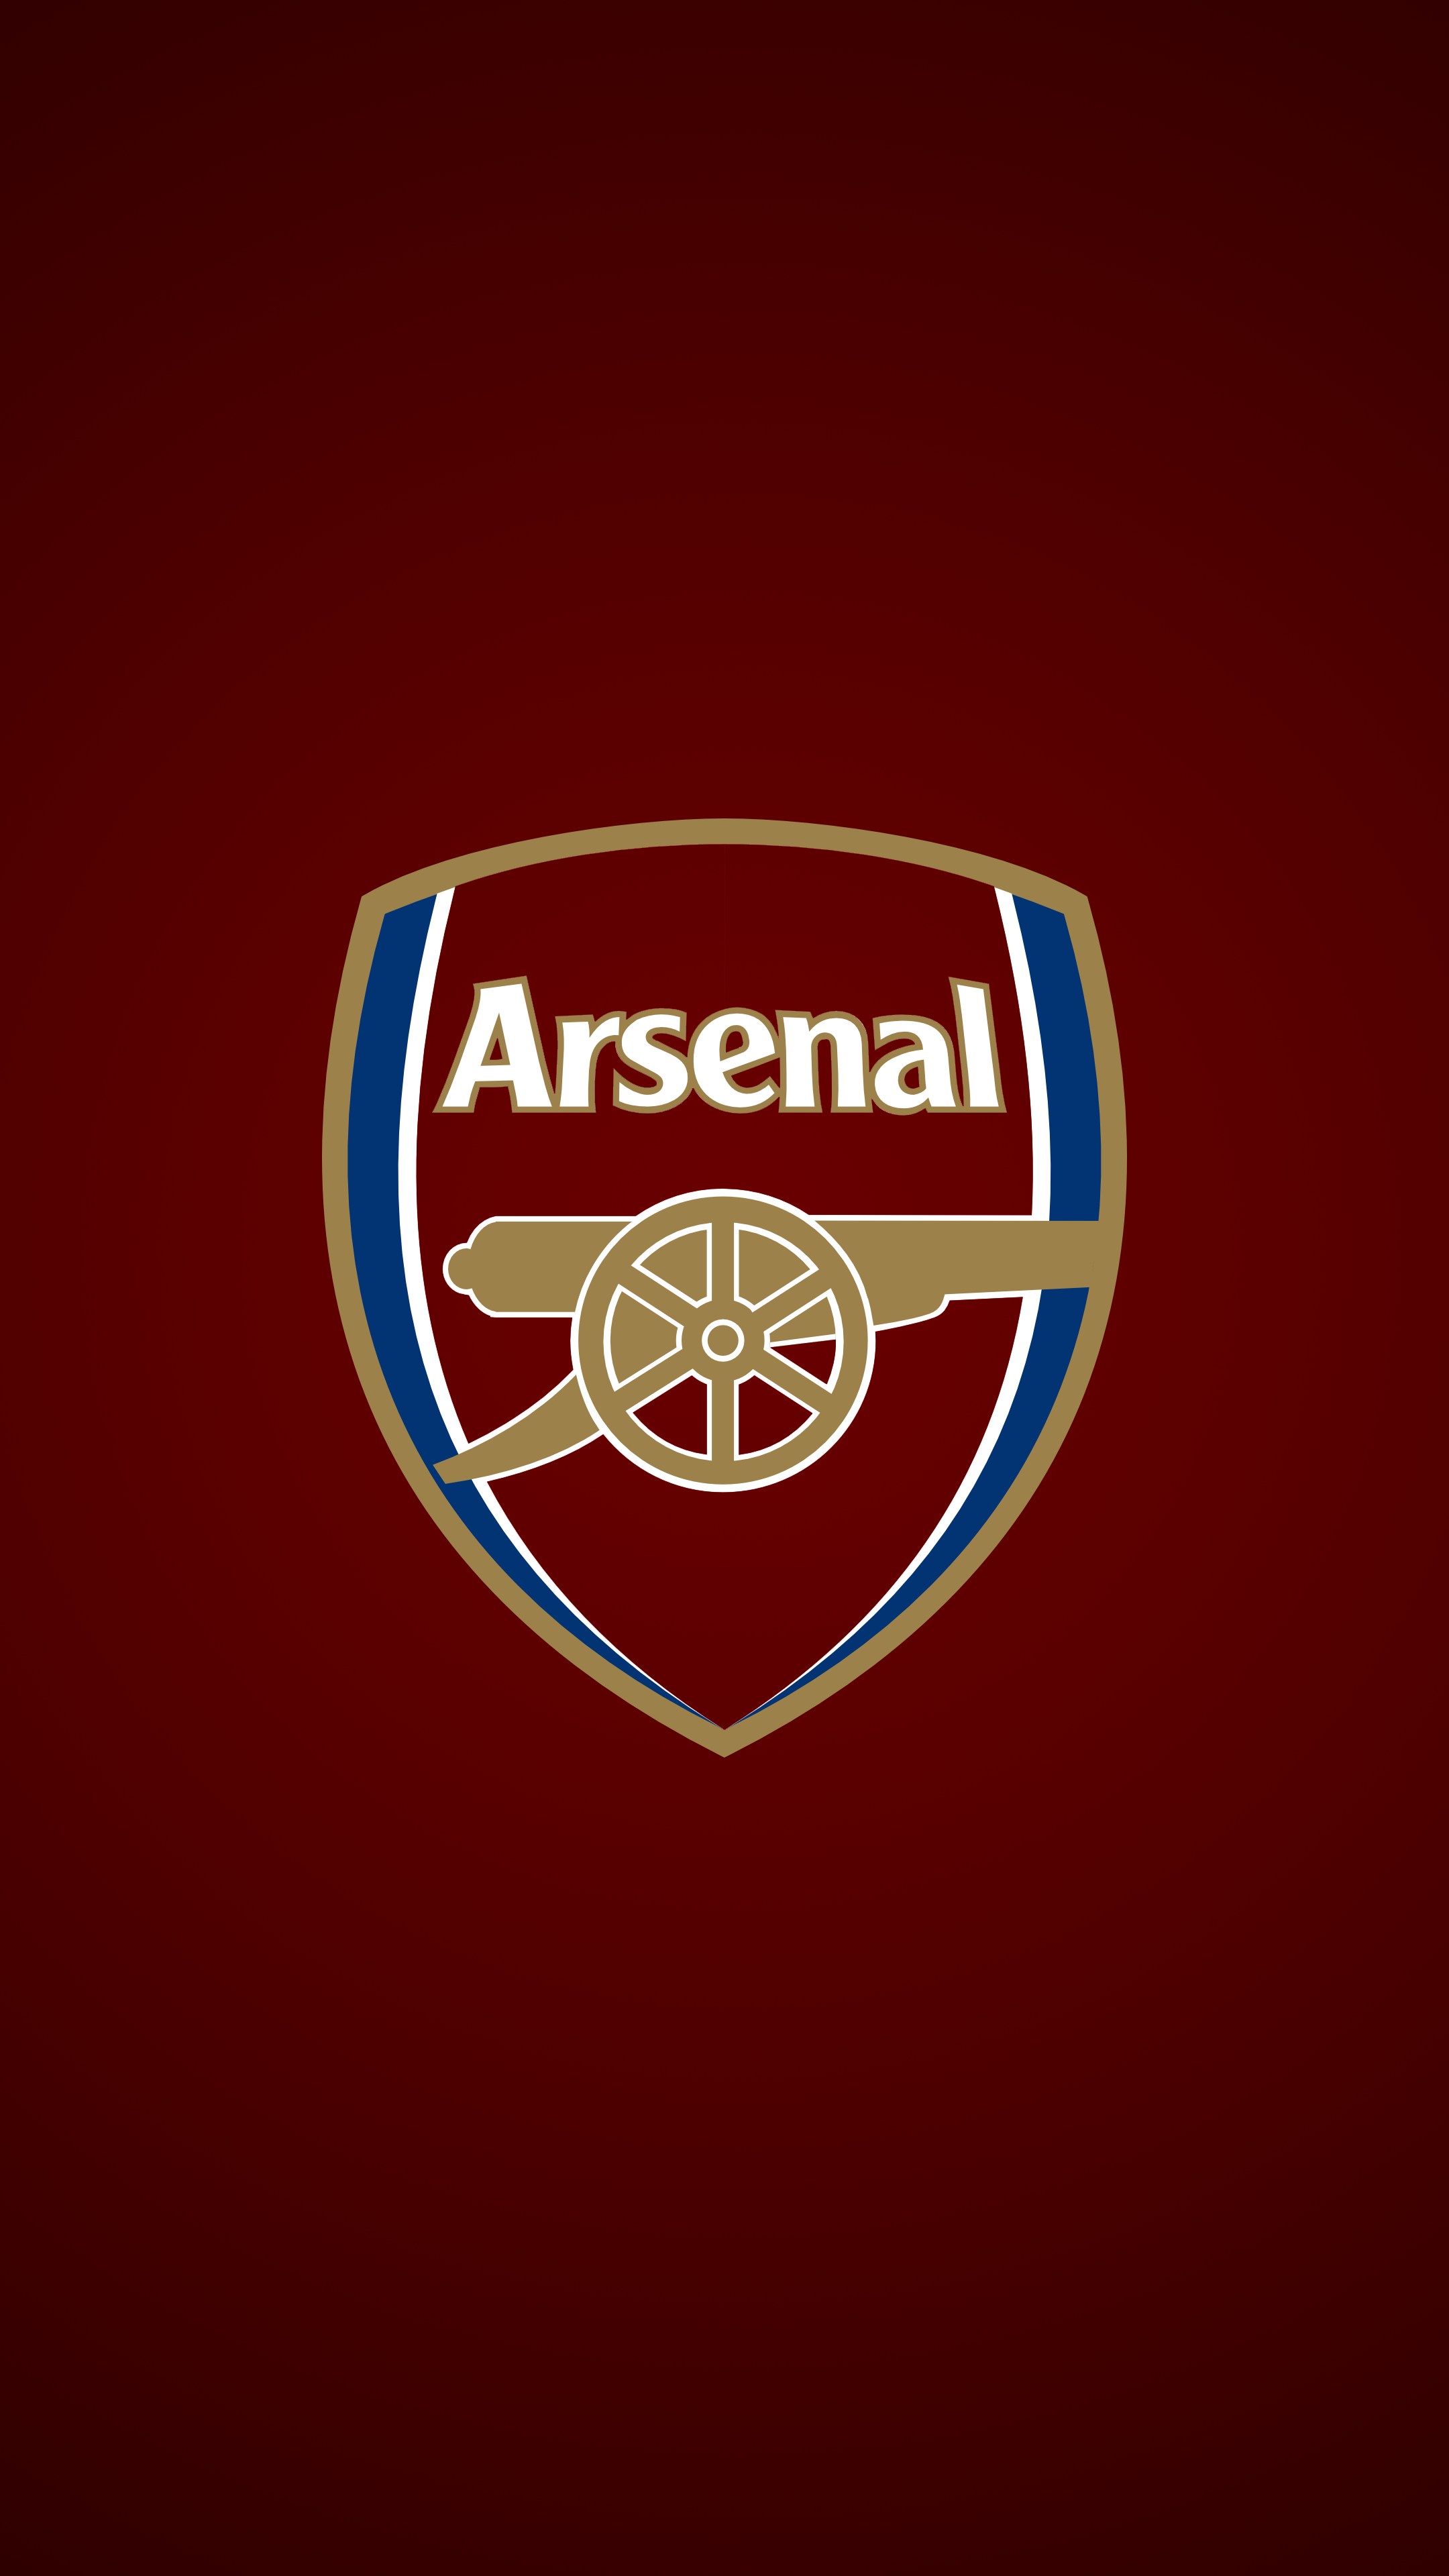 Arsenal football club ideas. arsenal football club, arsenal football, arsenal